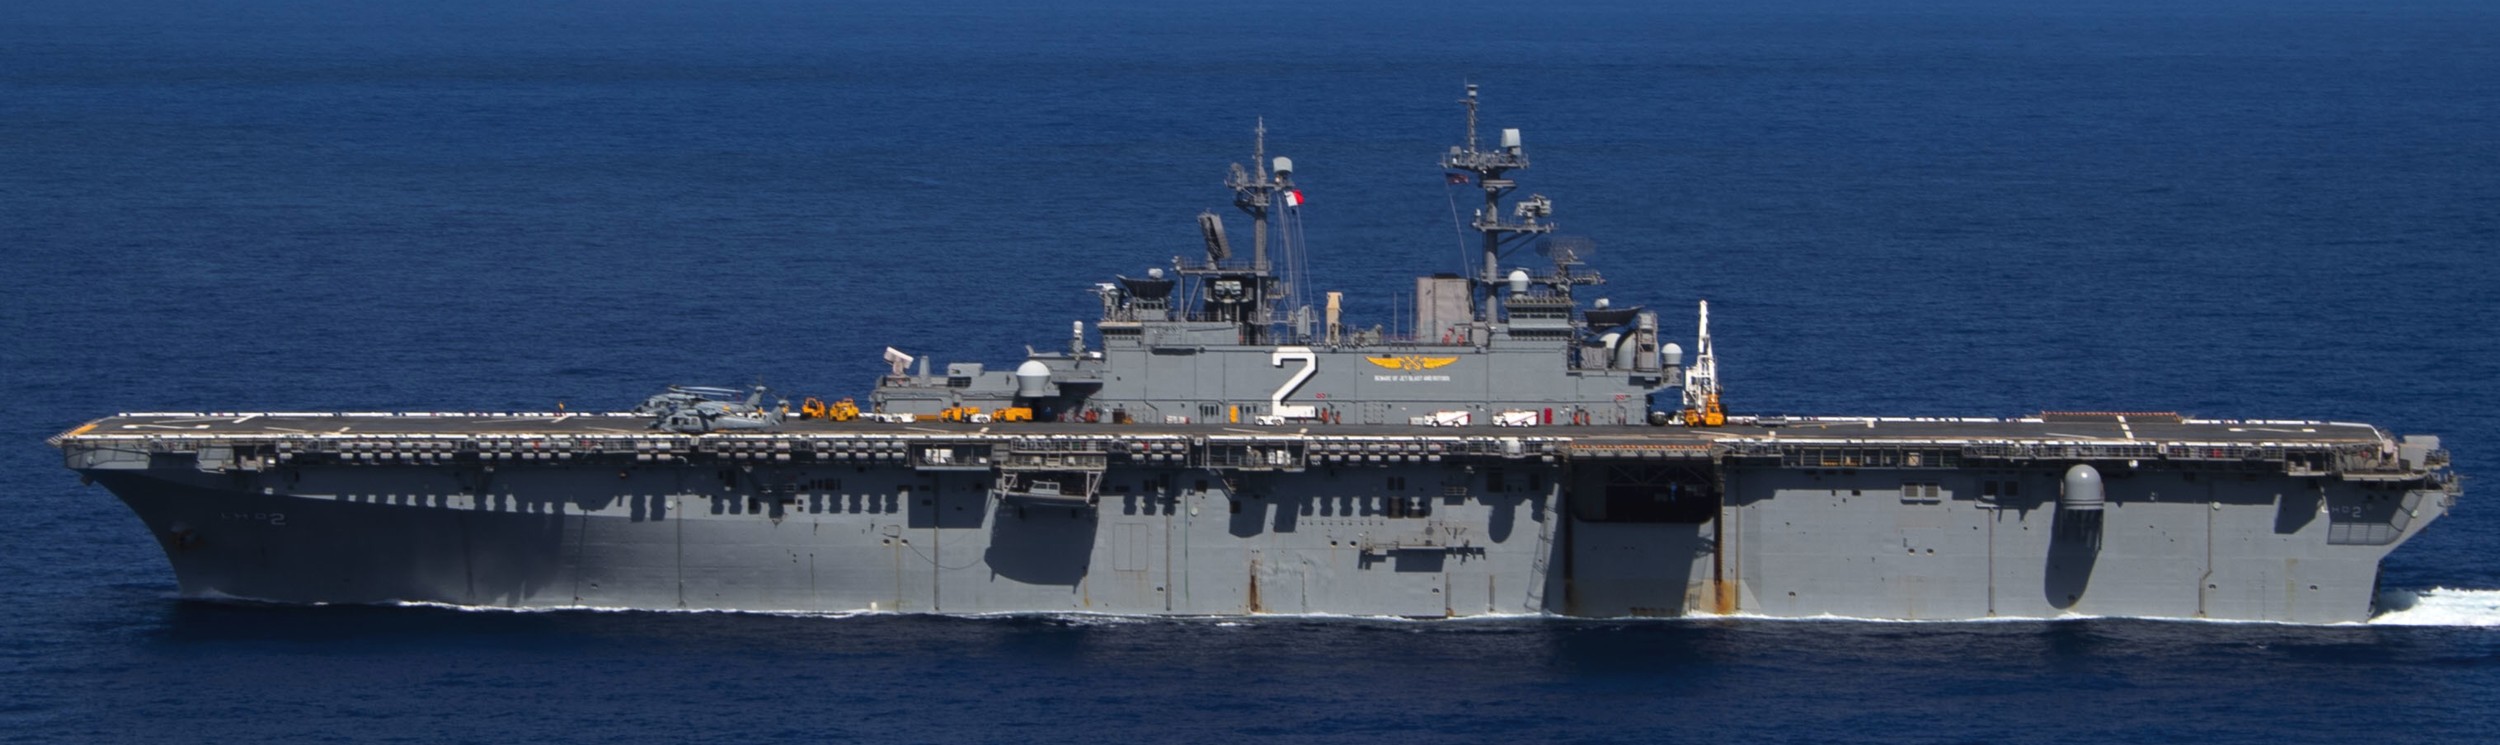 lhd-2 uss essex wasp class amphibious assault ship landing helicopter us navy marines rimpac 2020